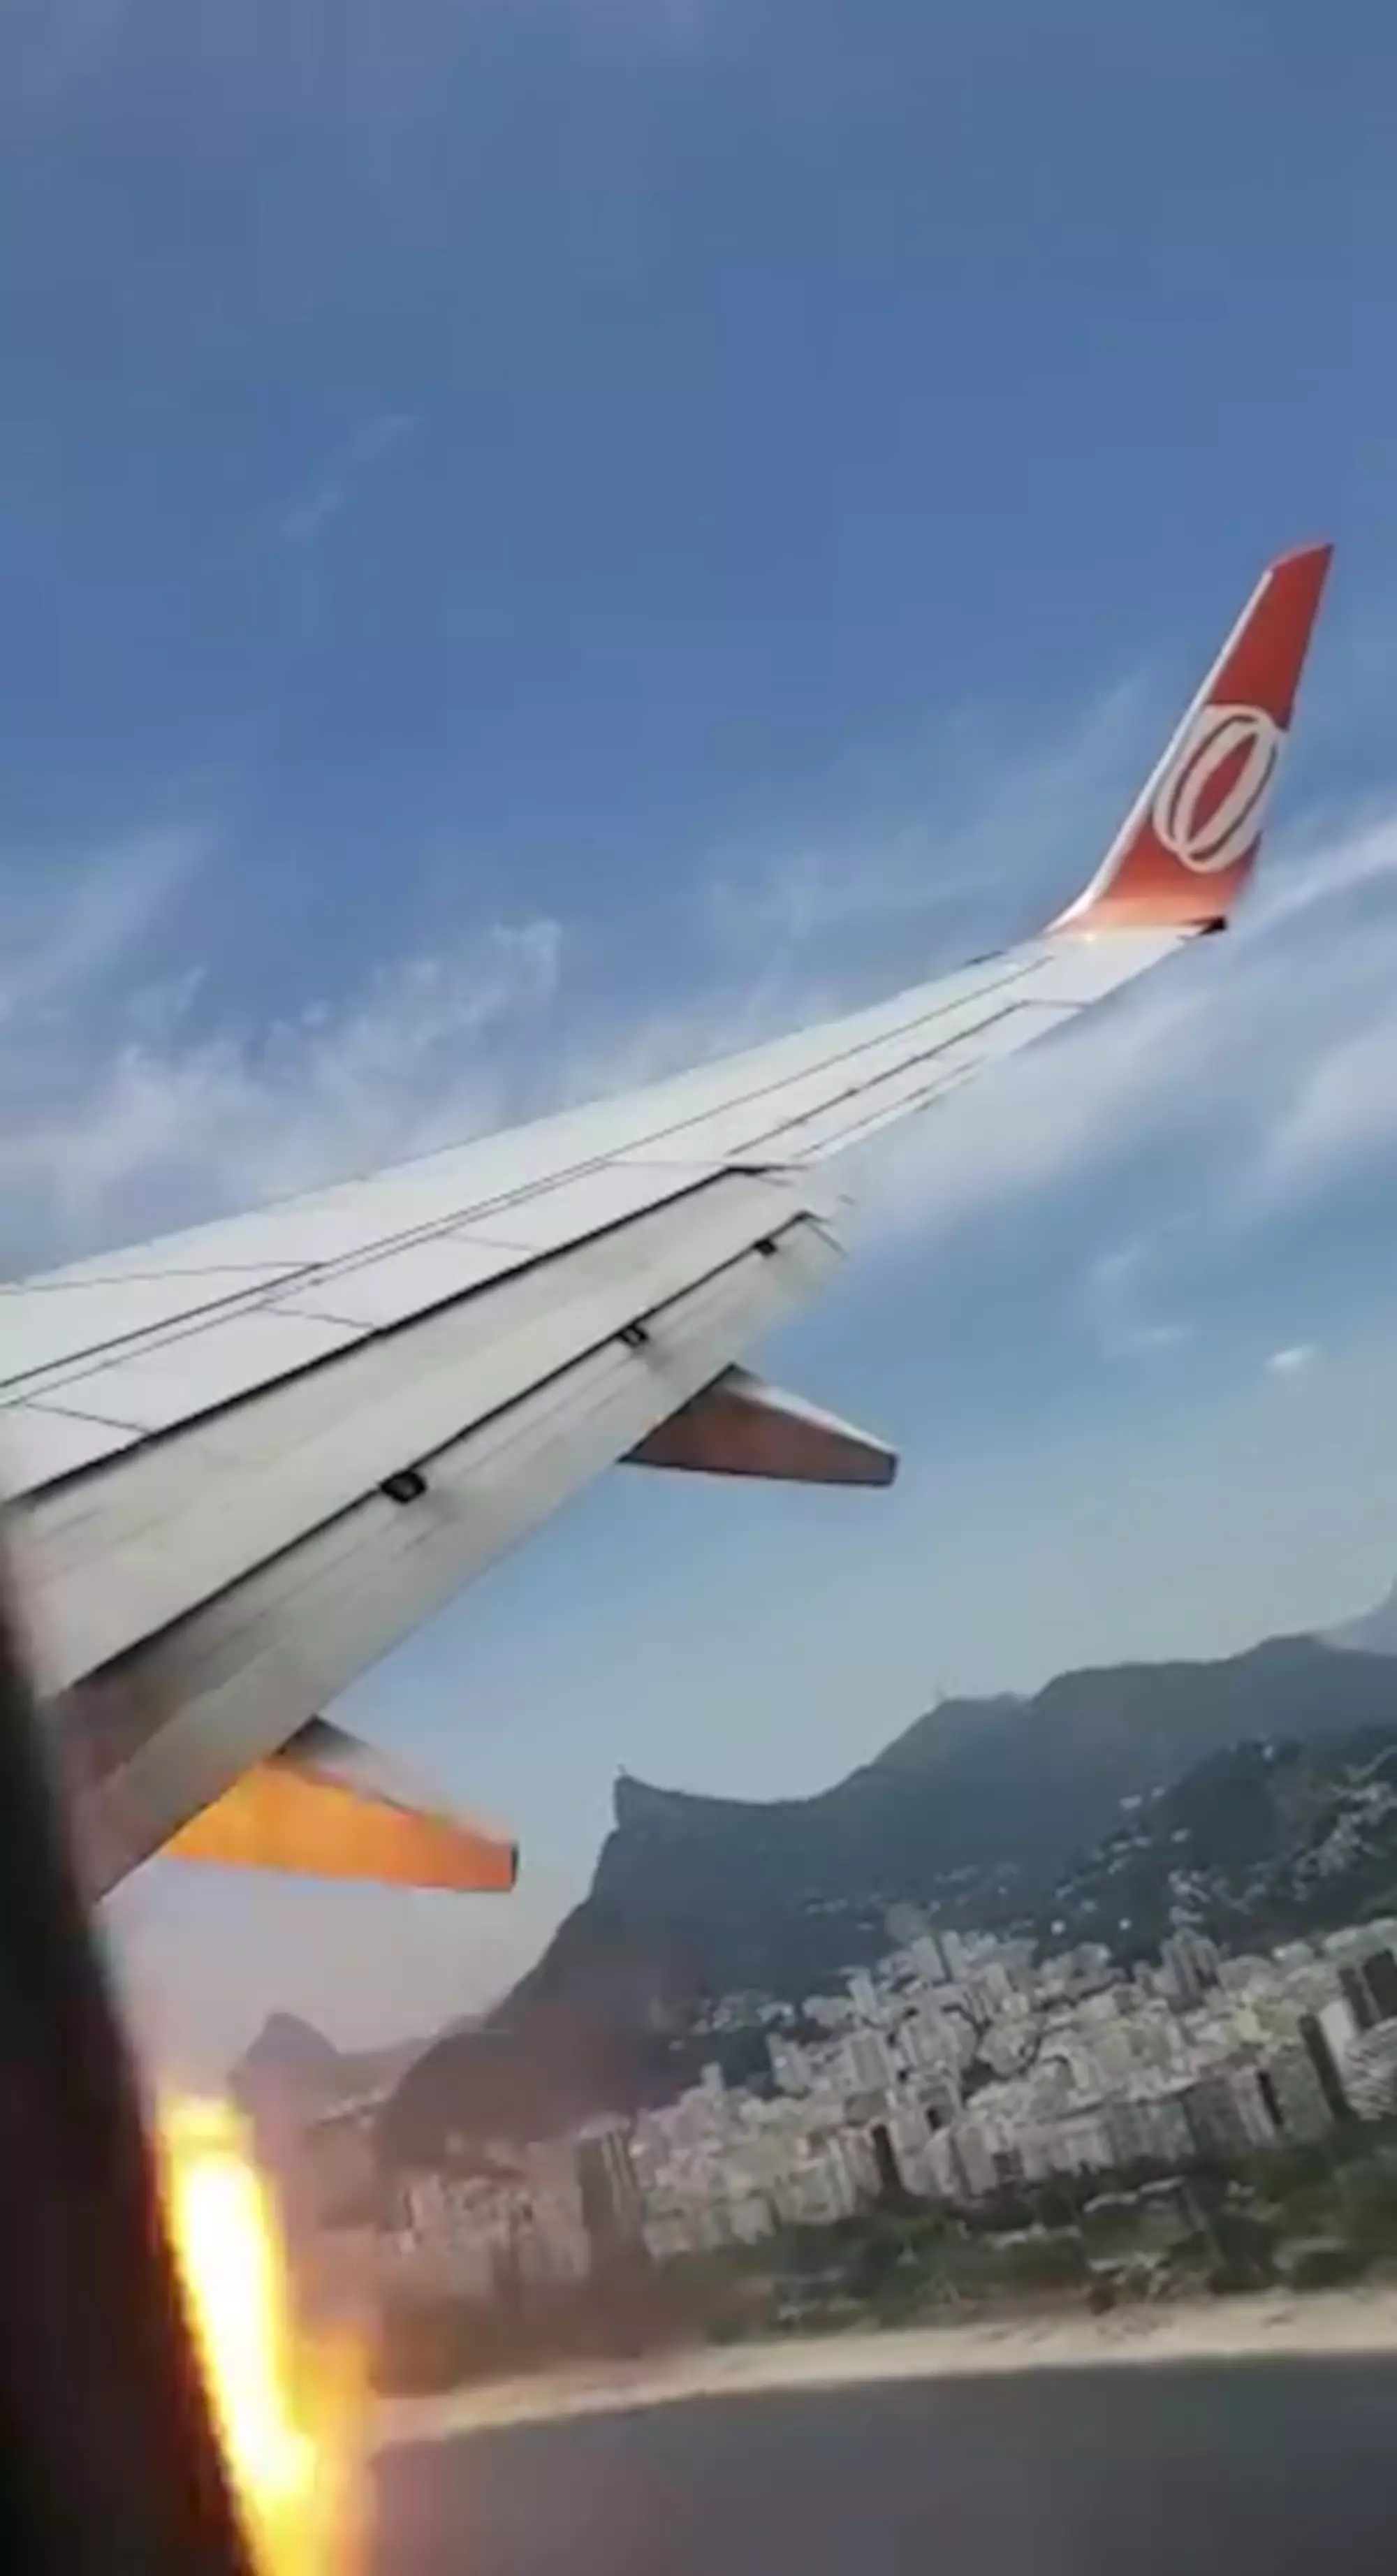 The plane was flying above Rio de Janeiro.